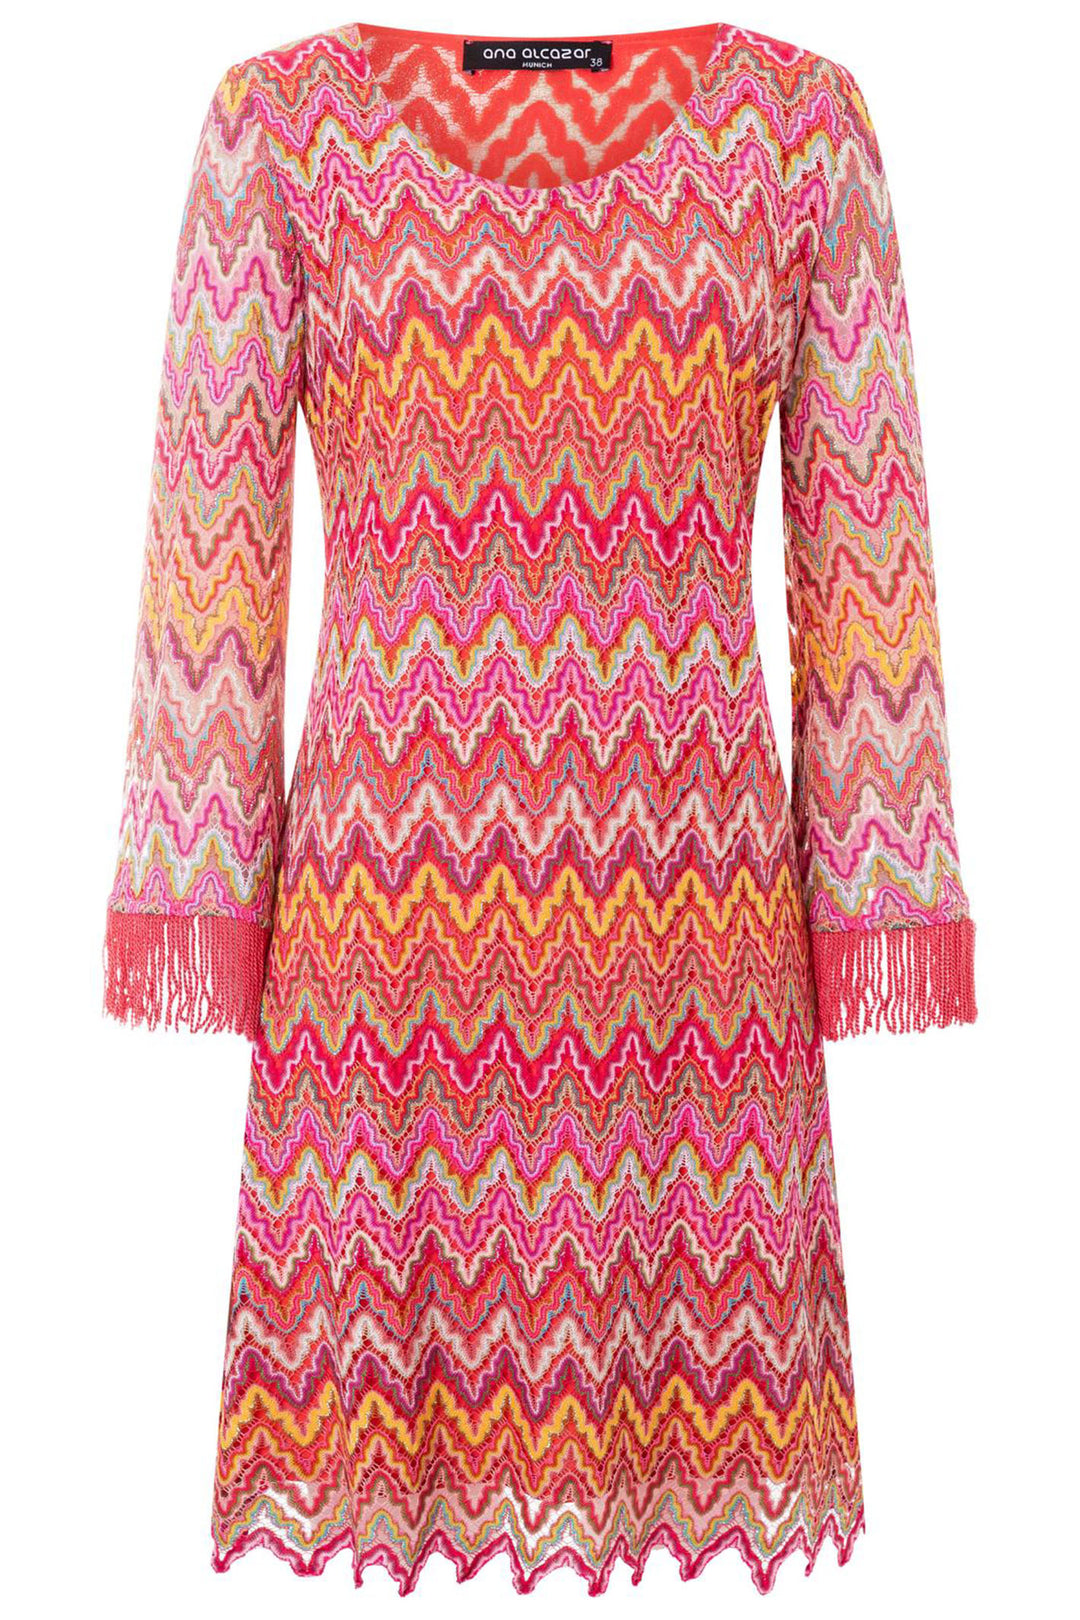 Ana Alcazar 040618 Pink Zig Zag Knit Tassle Cuff Dress - Olivia Grace Fashion